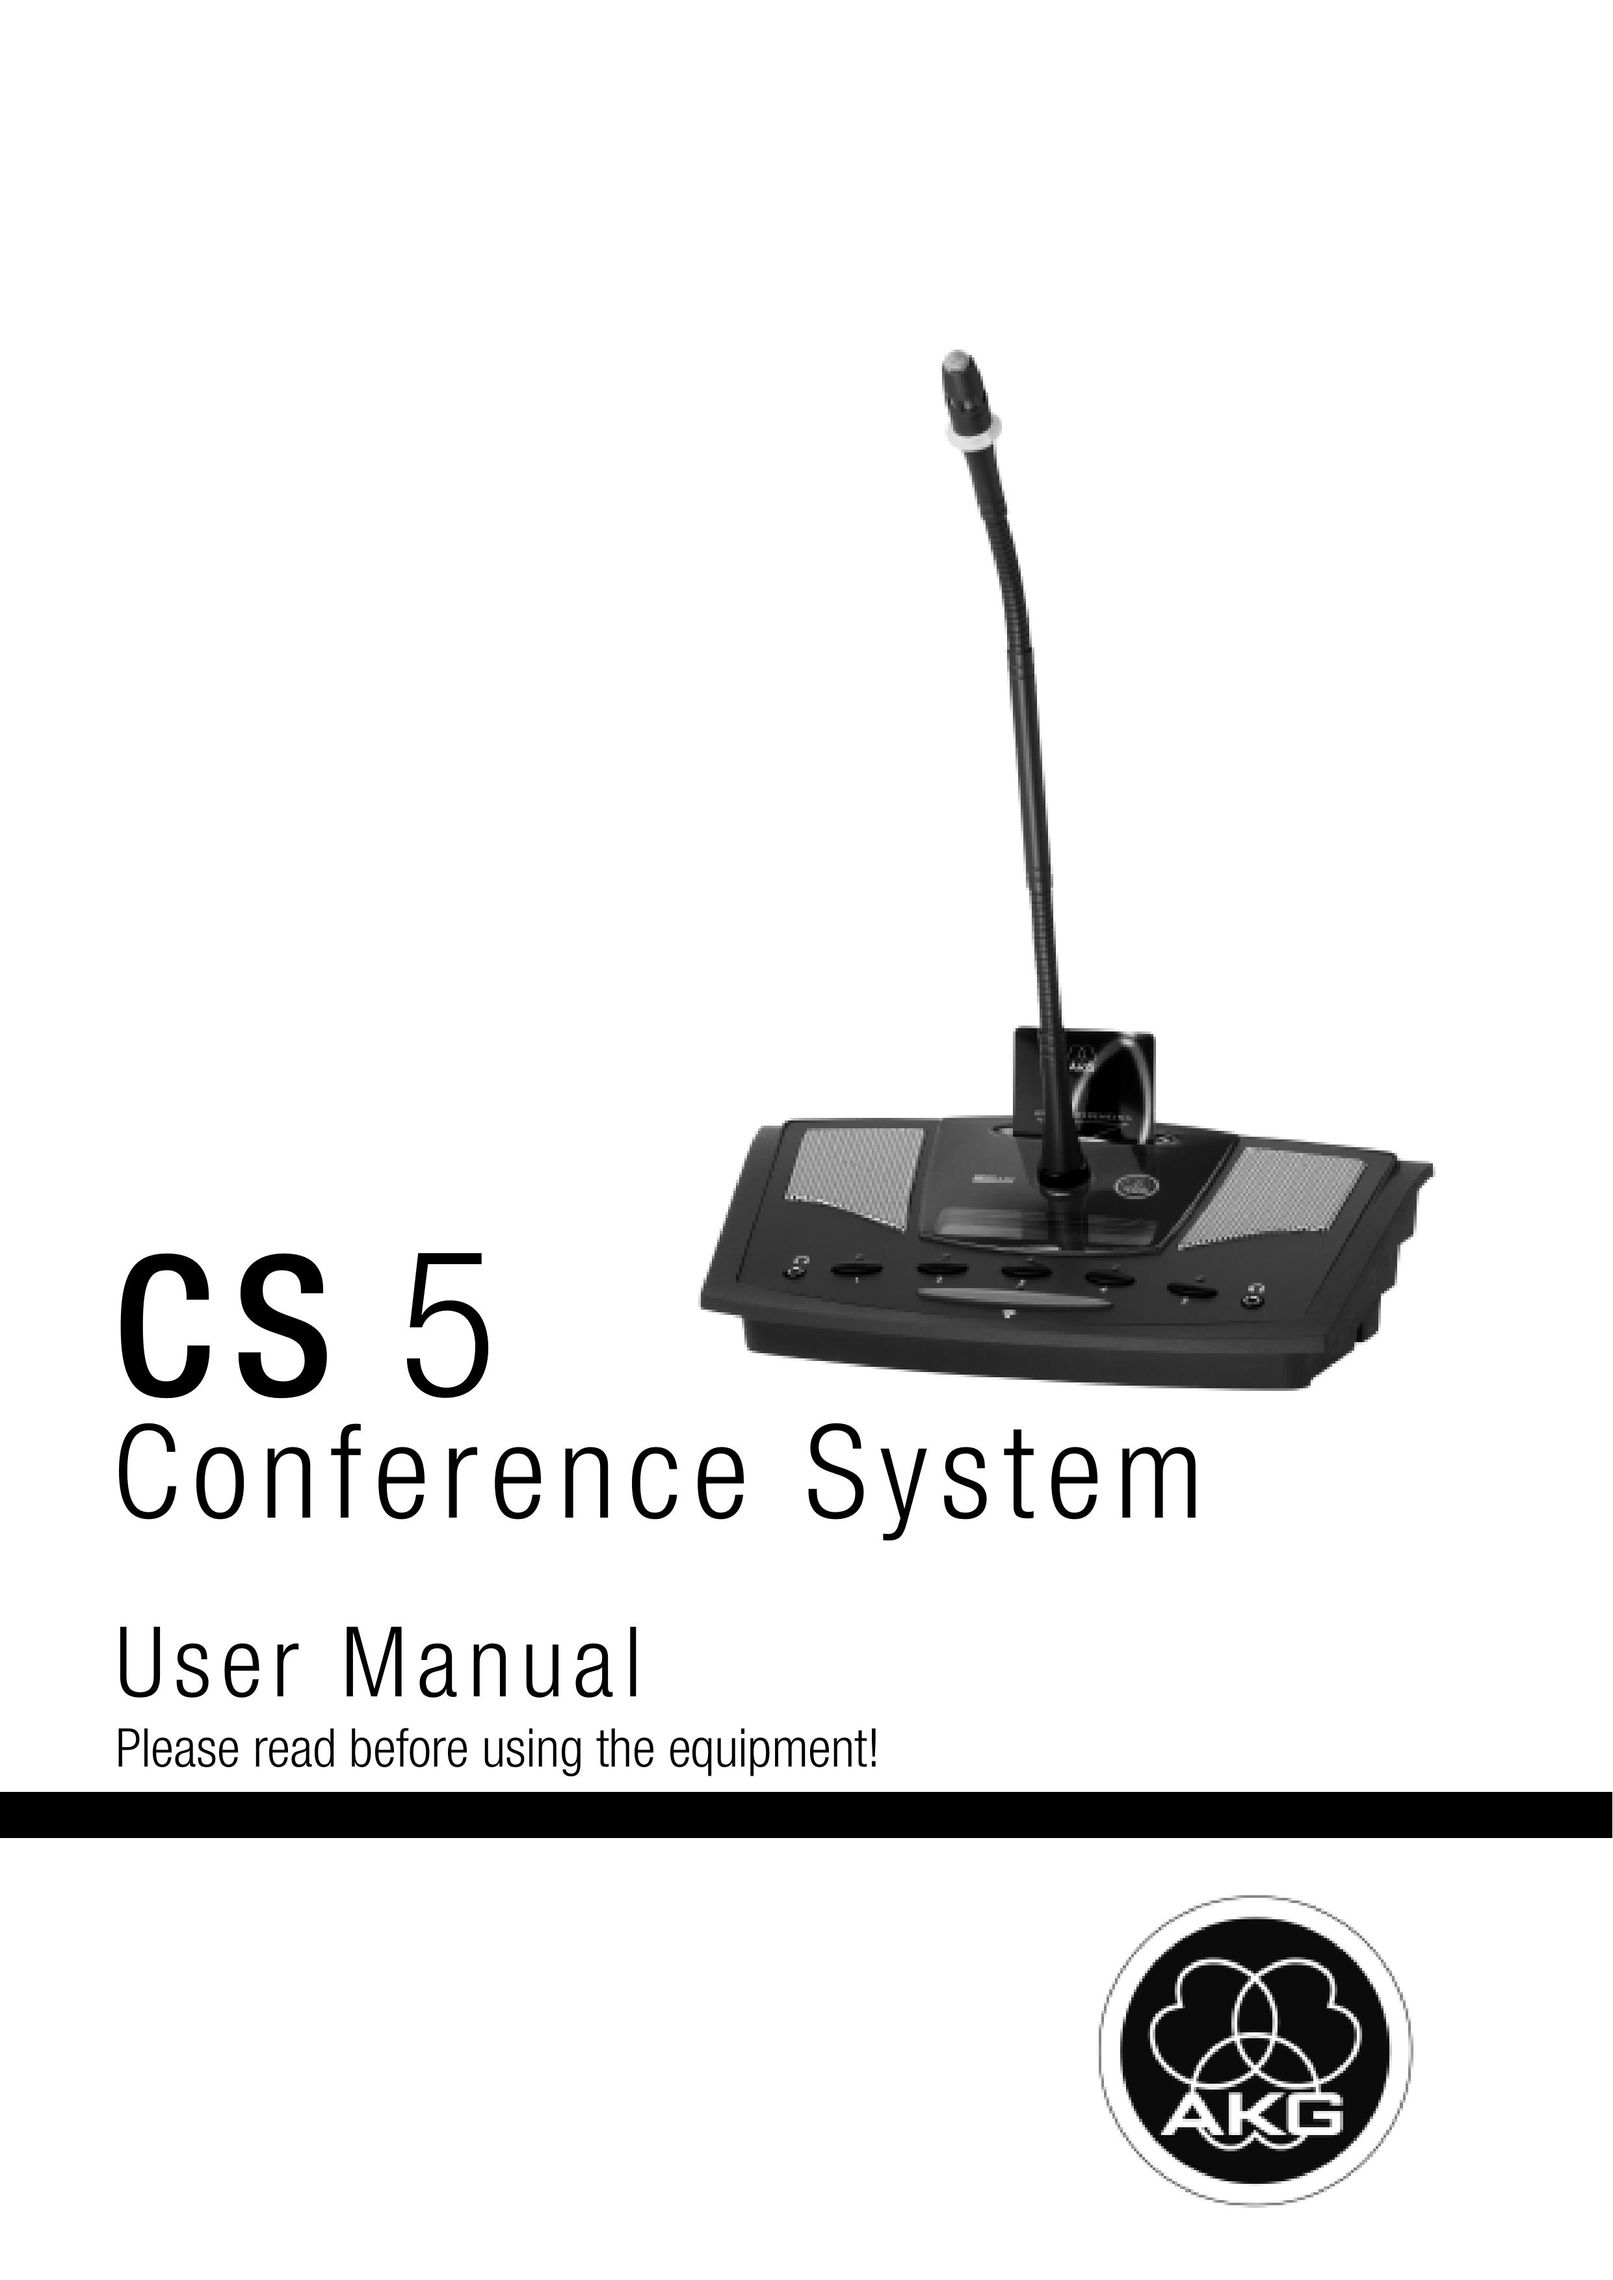 AKG Acoustics CS 5 Conference Phone User Manual